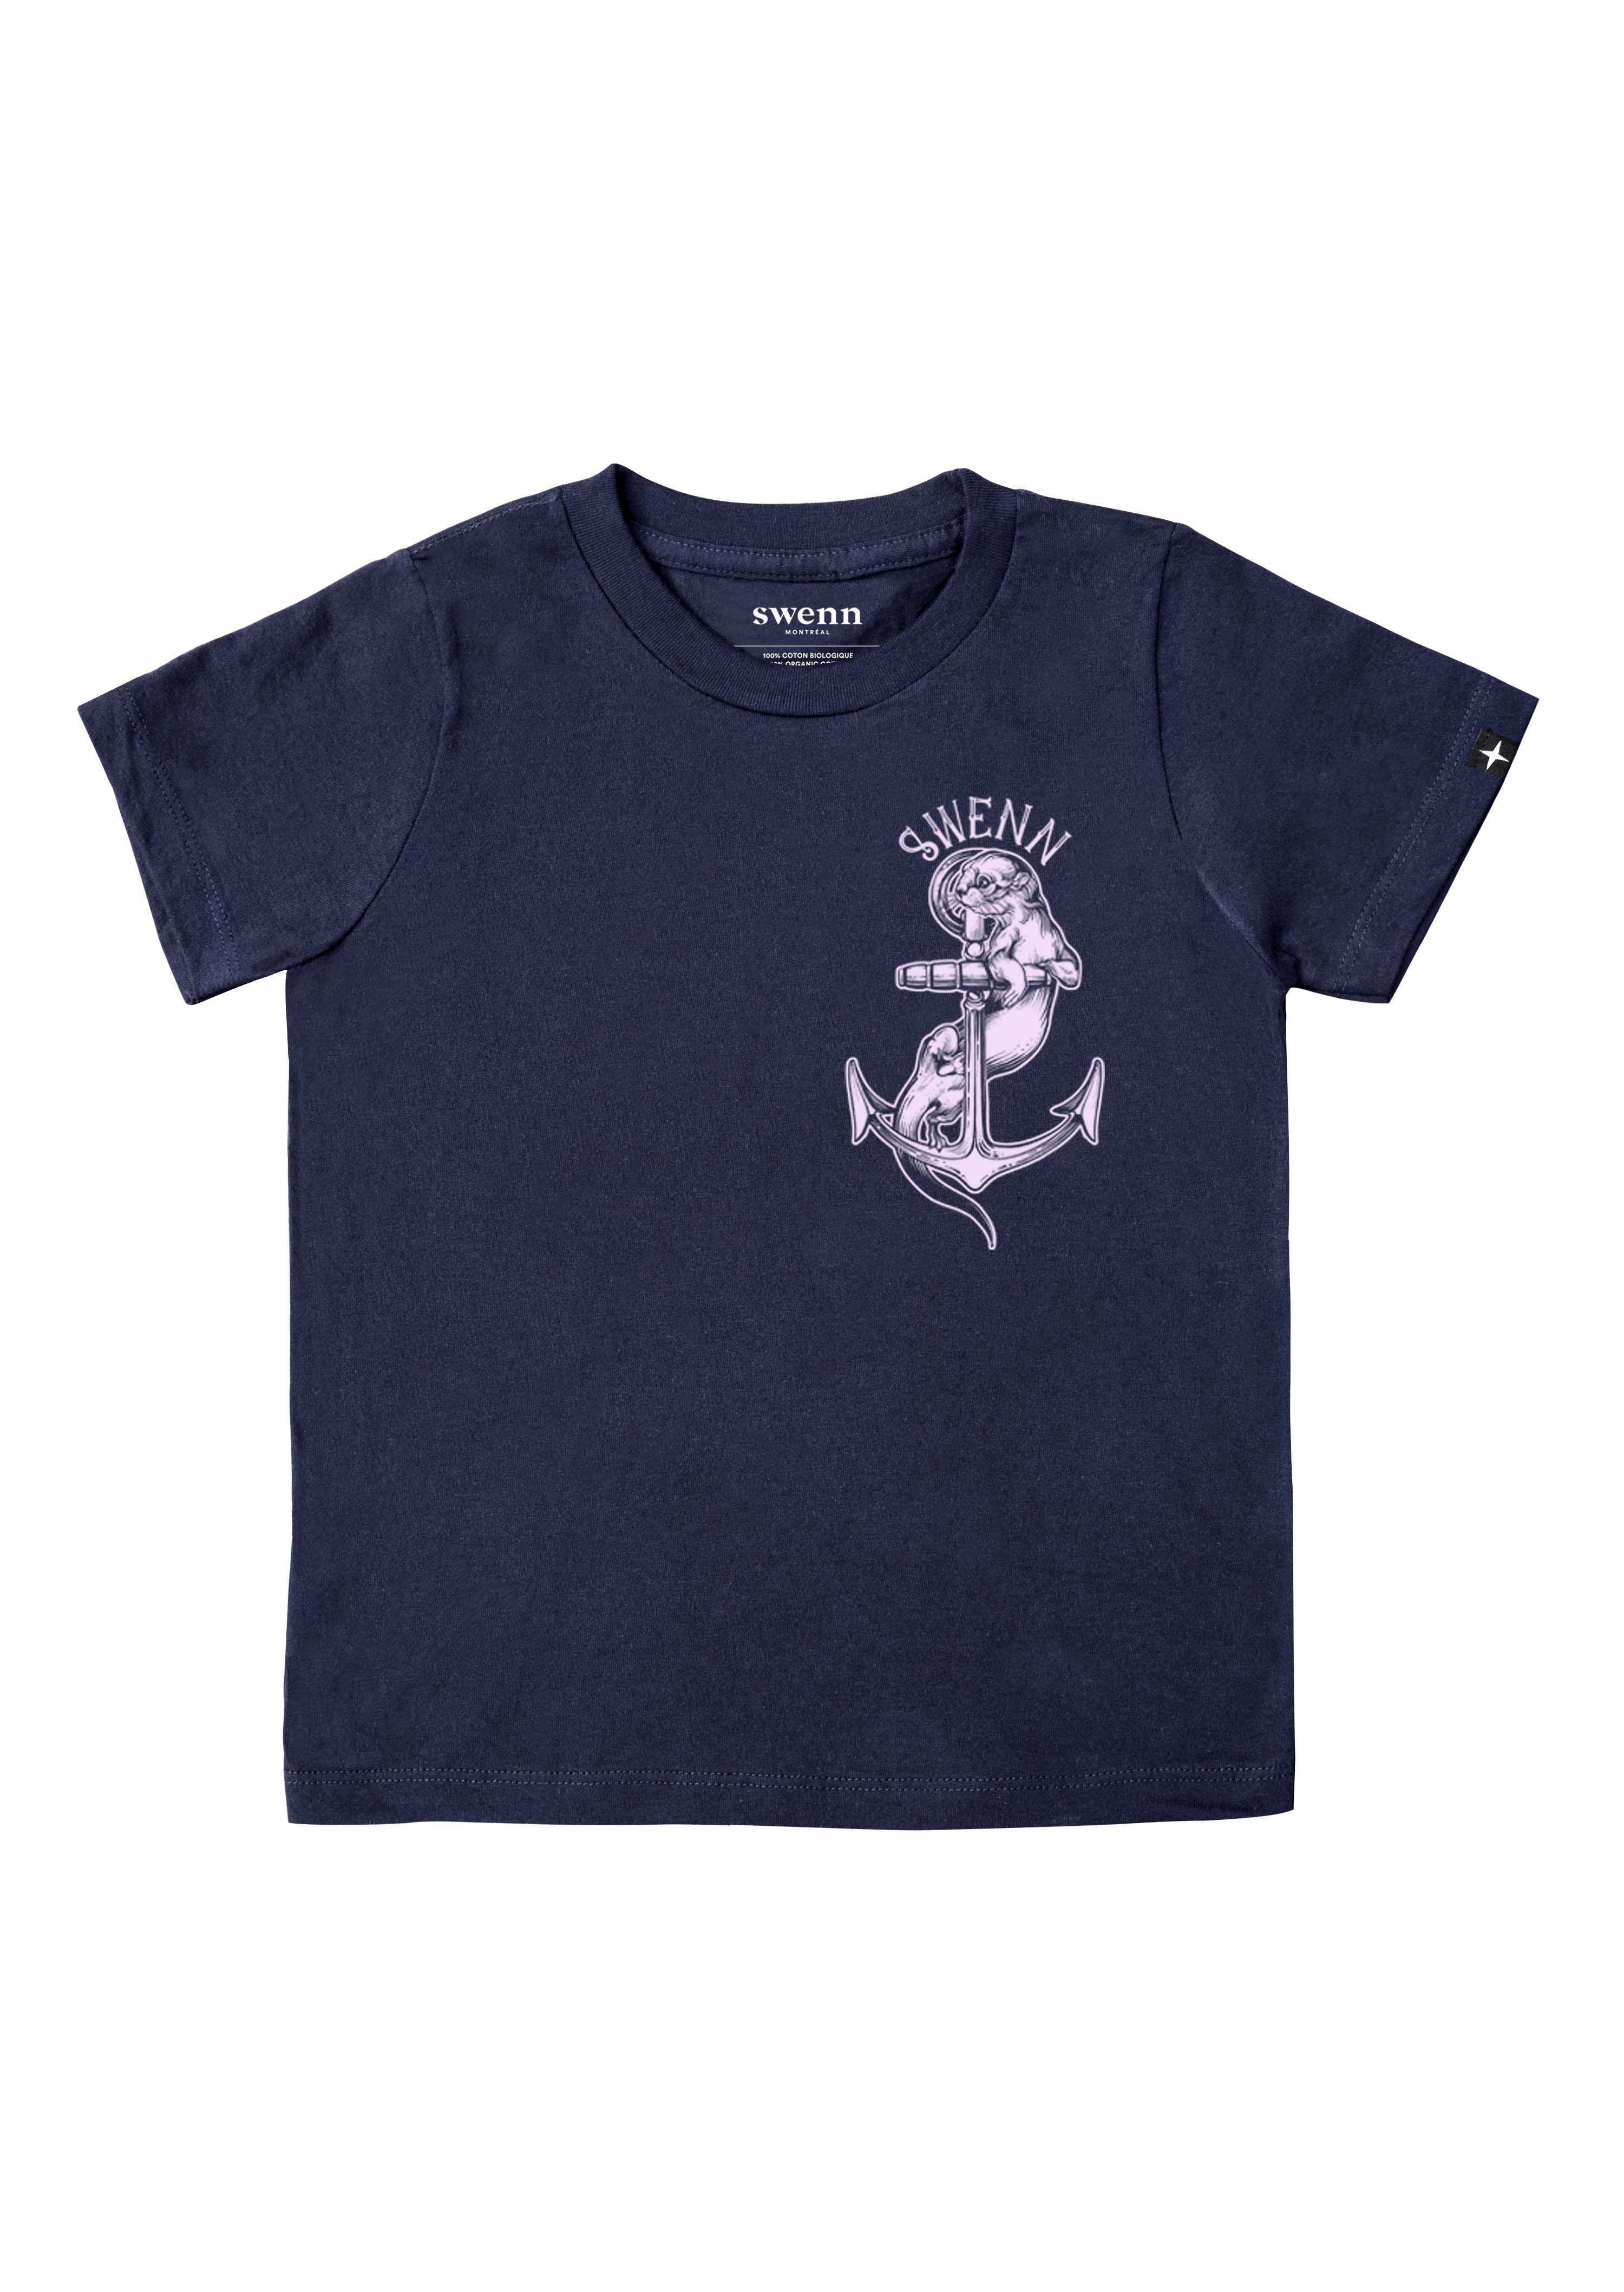 SWENN - Moray t-shirt - printed in Quebec